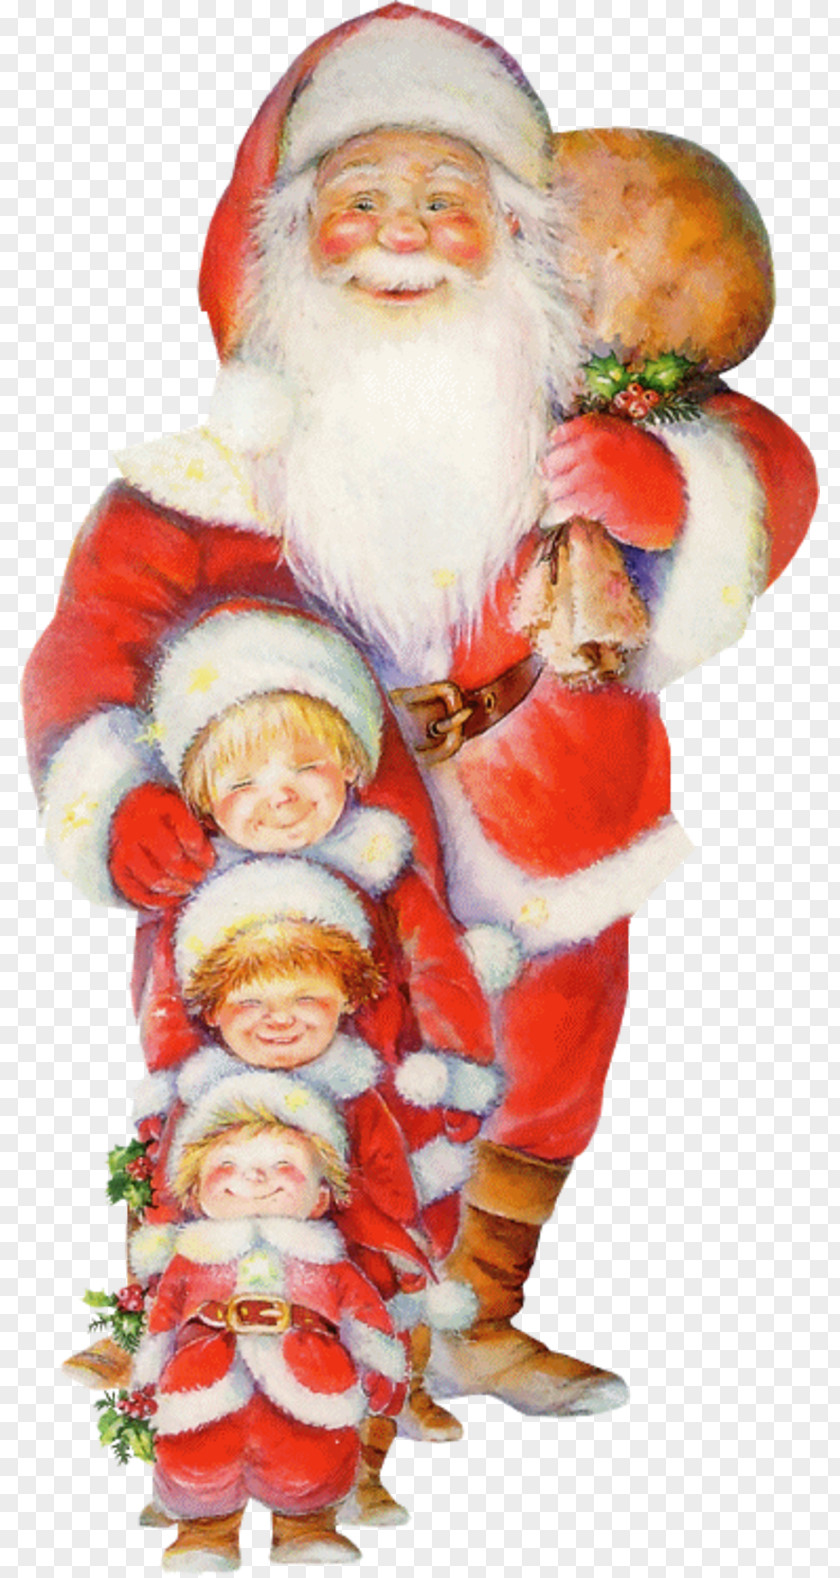 Santa Claus Animation Christmas PNG